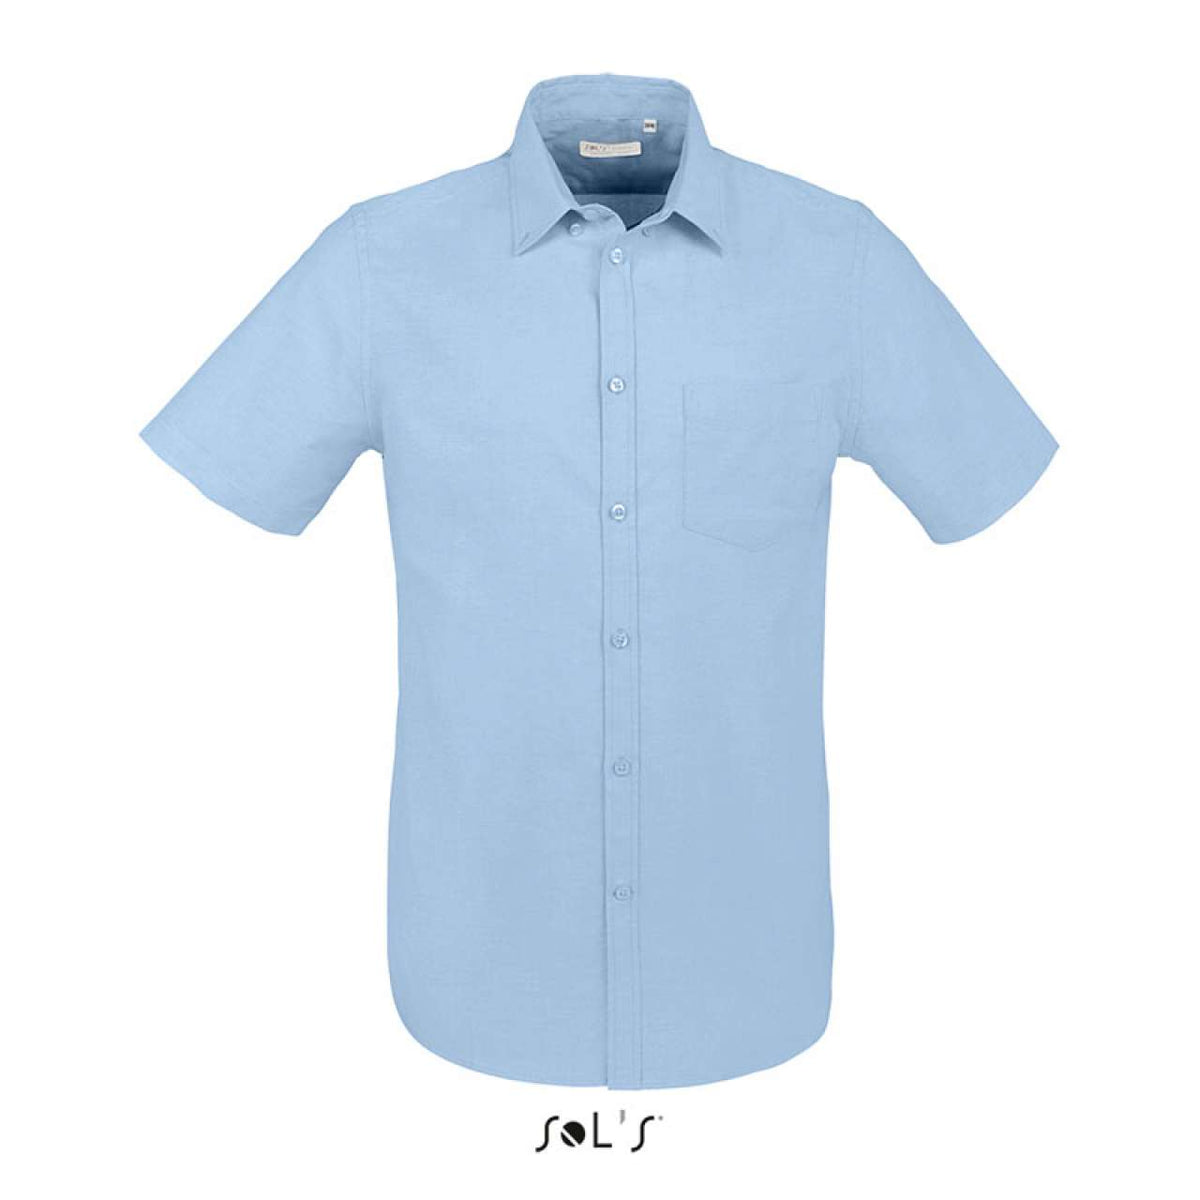 SOL'S Herren Hemd Kurzarm Classic Oxford Shirt Kurzarmhemd Business